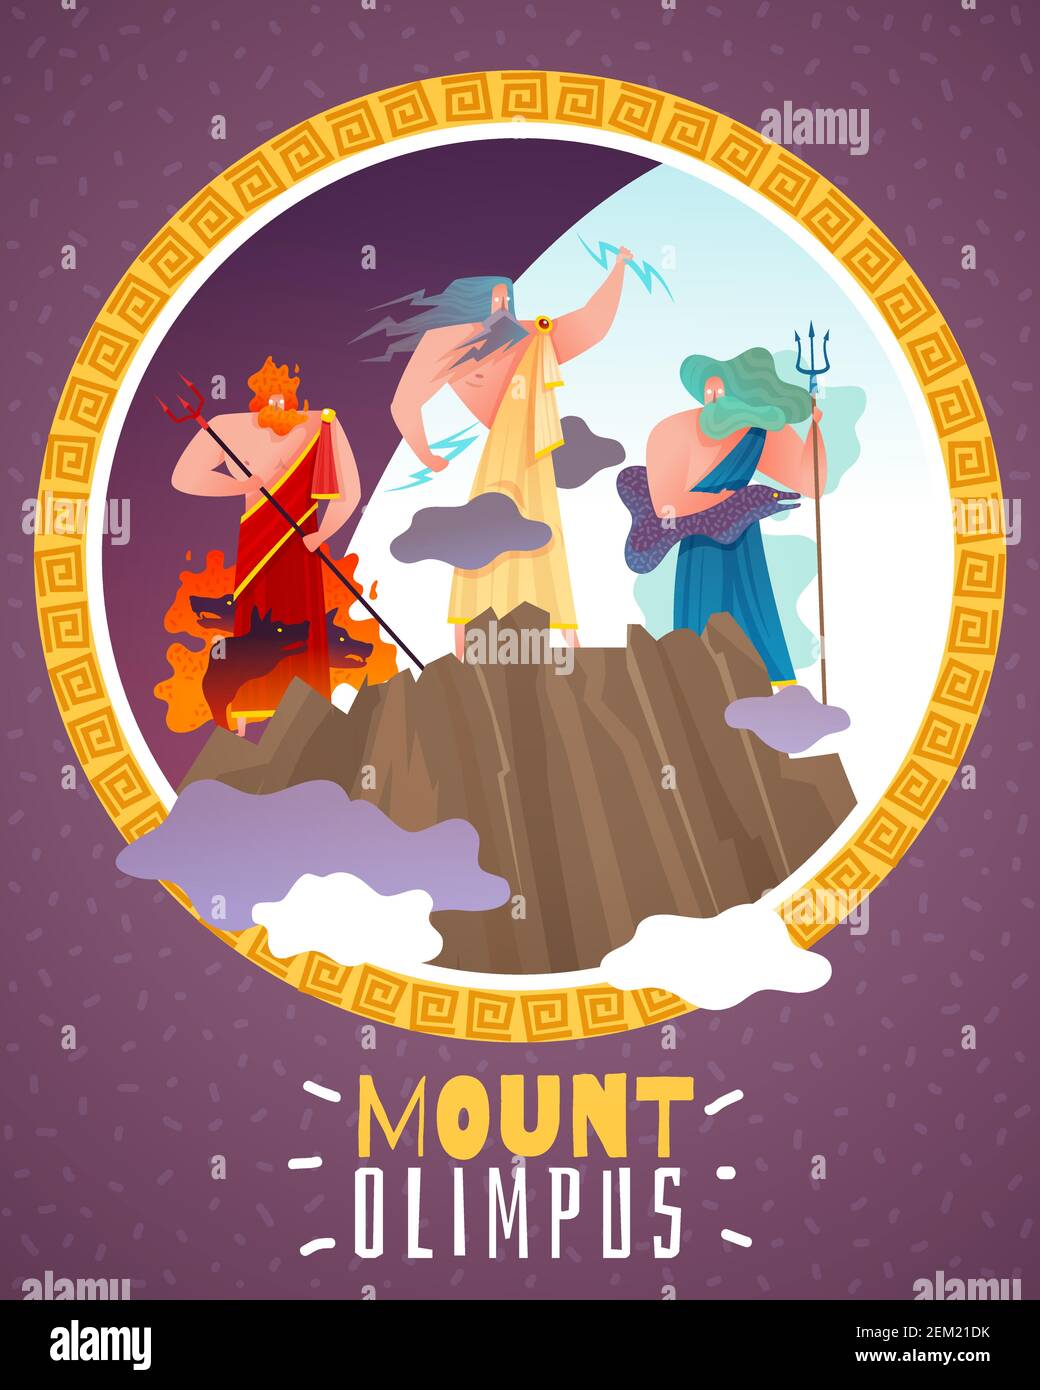 Mount olimpus cartoon poster with ancient greece gods zeus poseidon hephaestus flat vector illustration Stock Vector